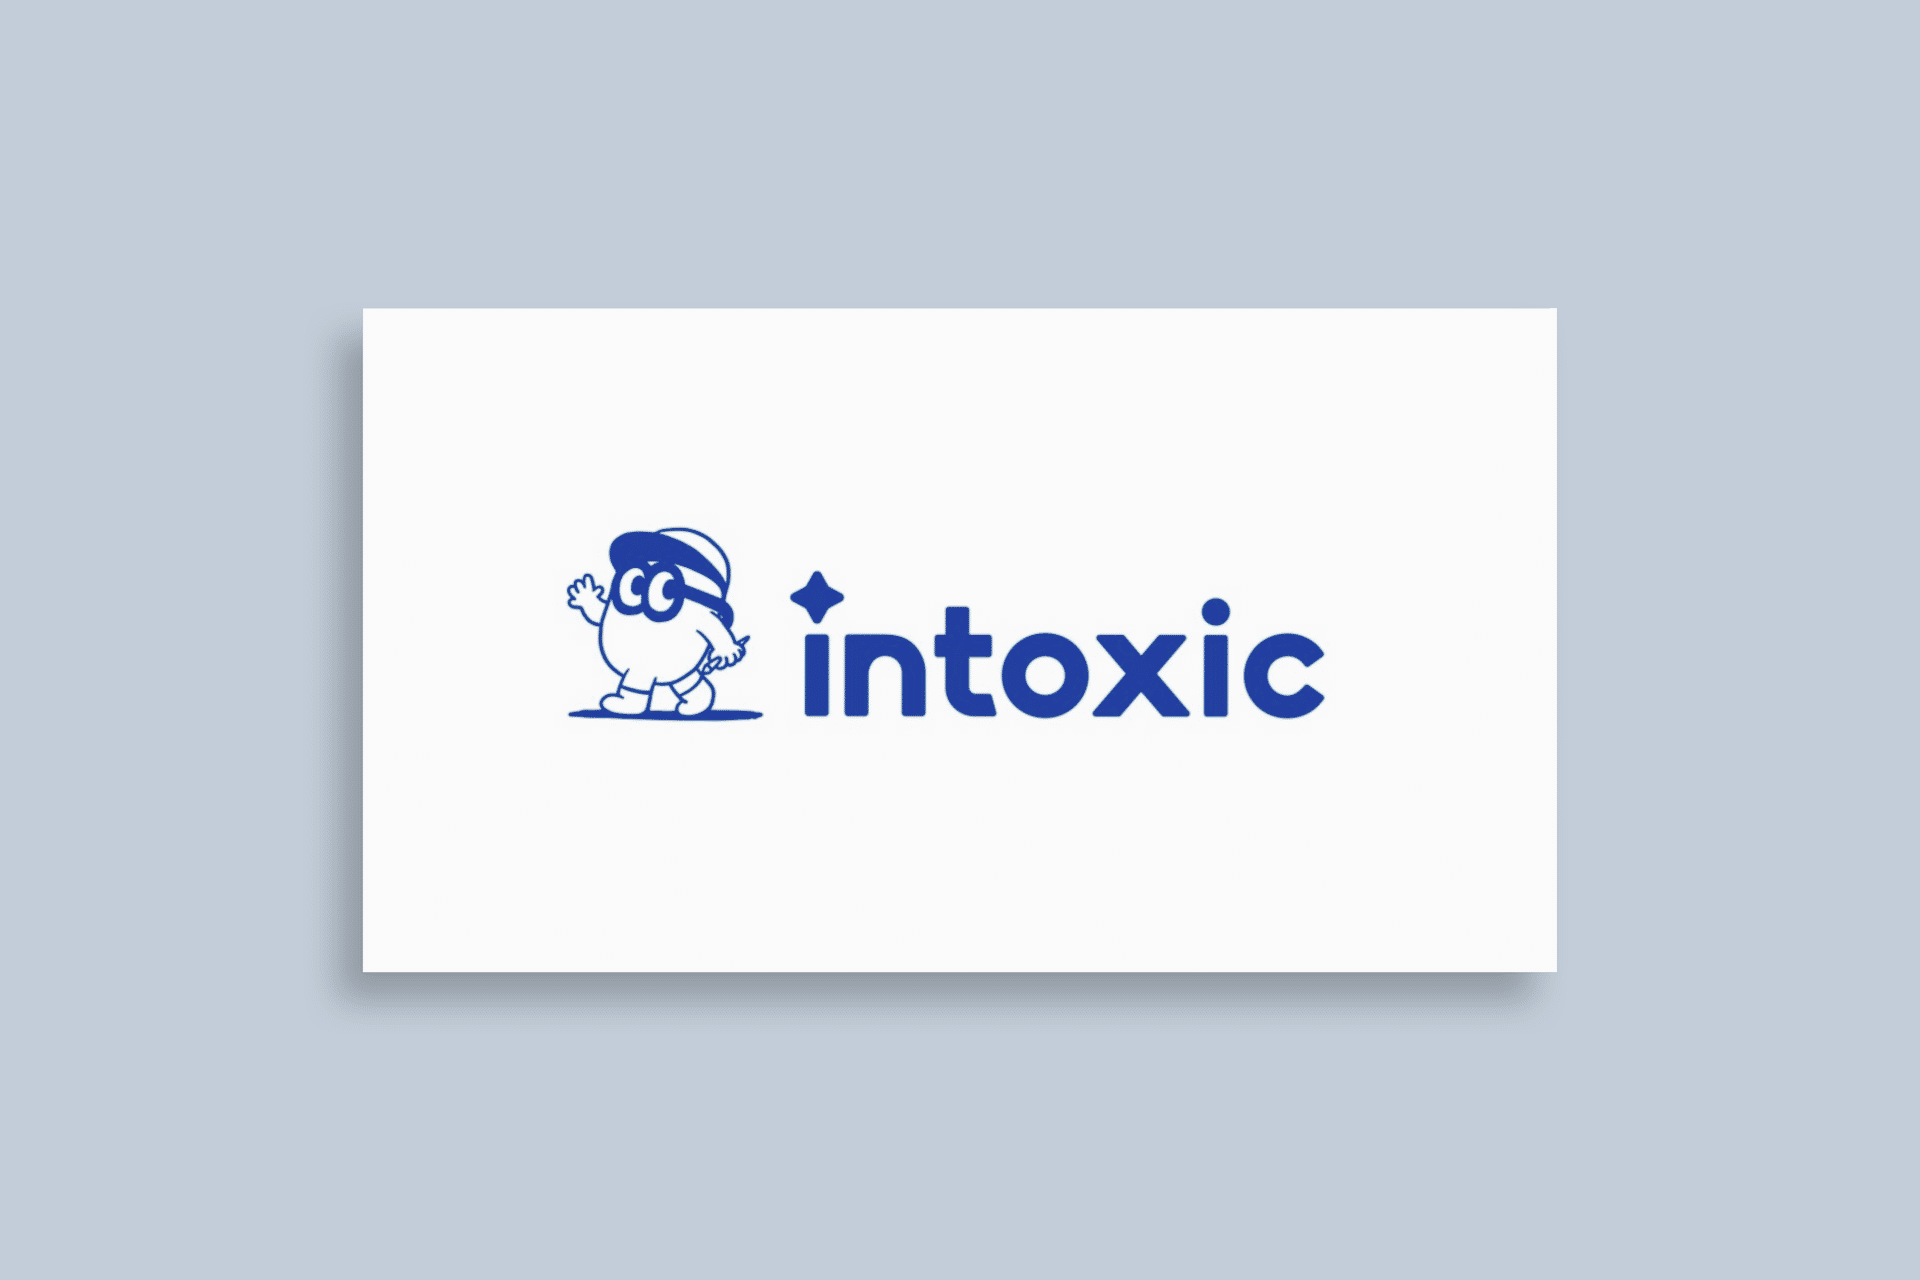 Intoxic-image